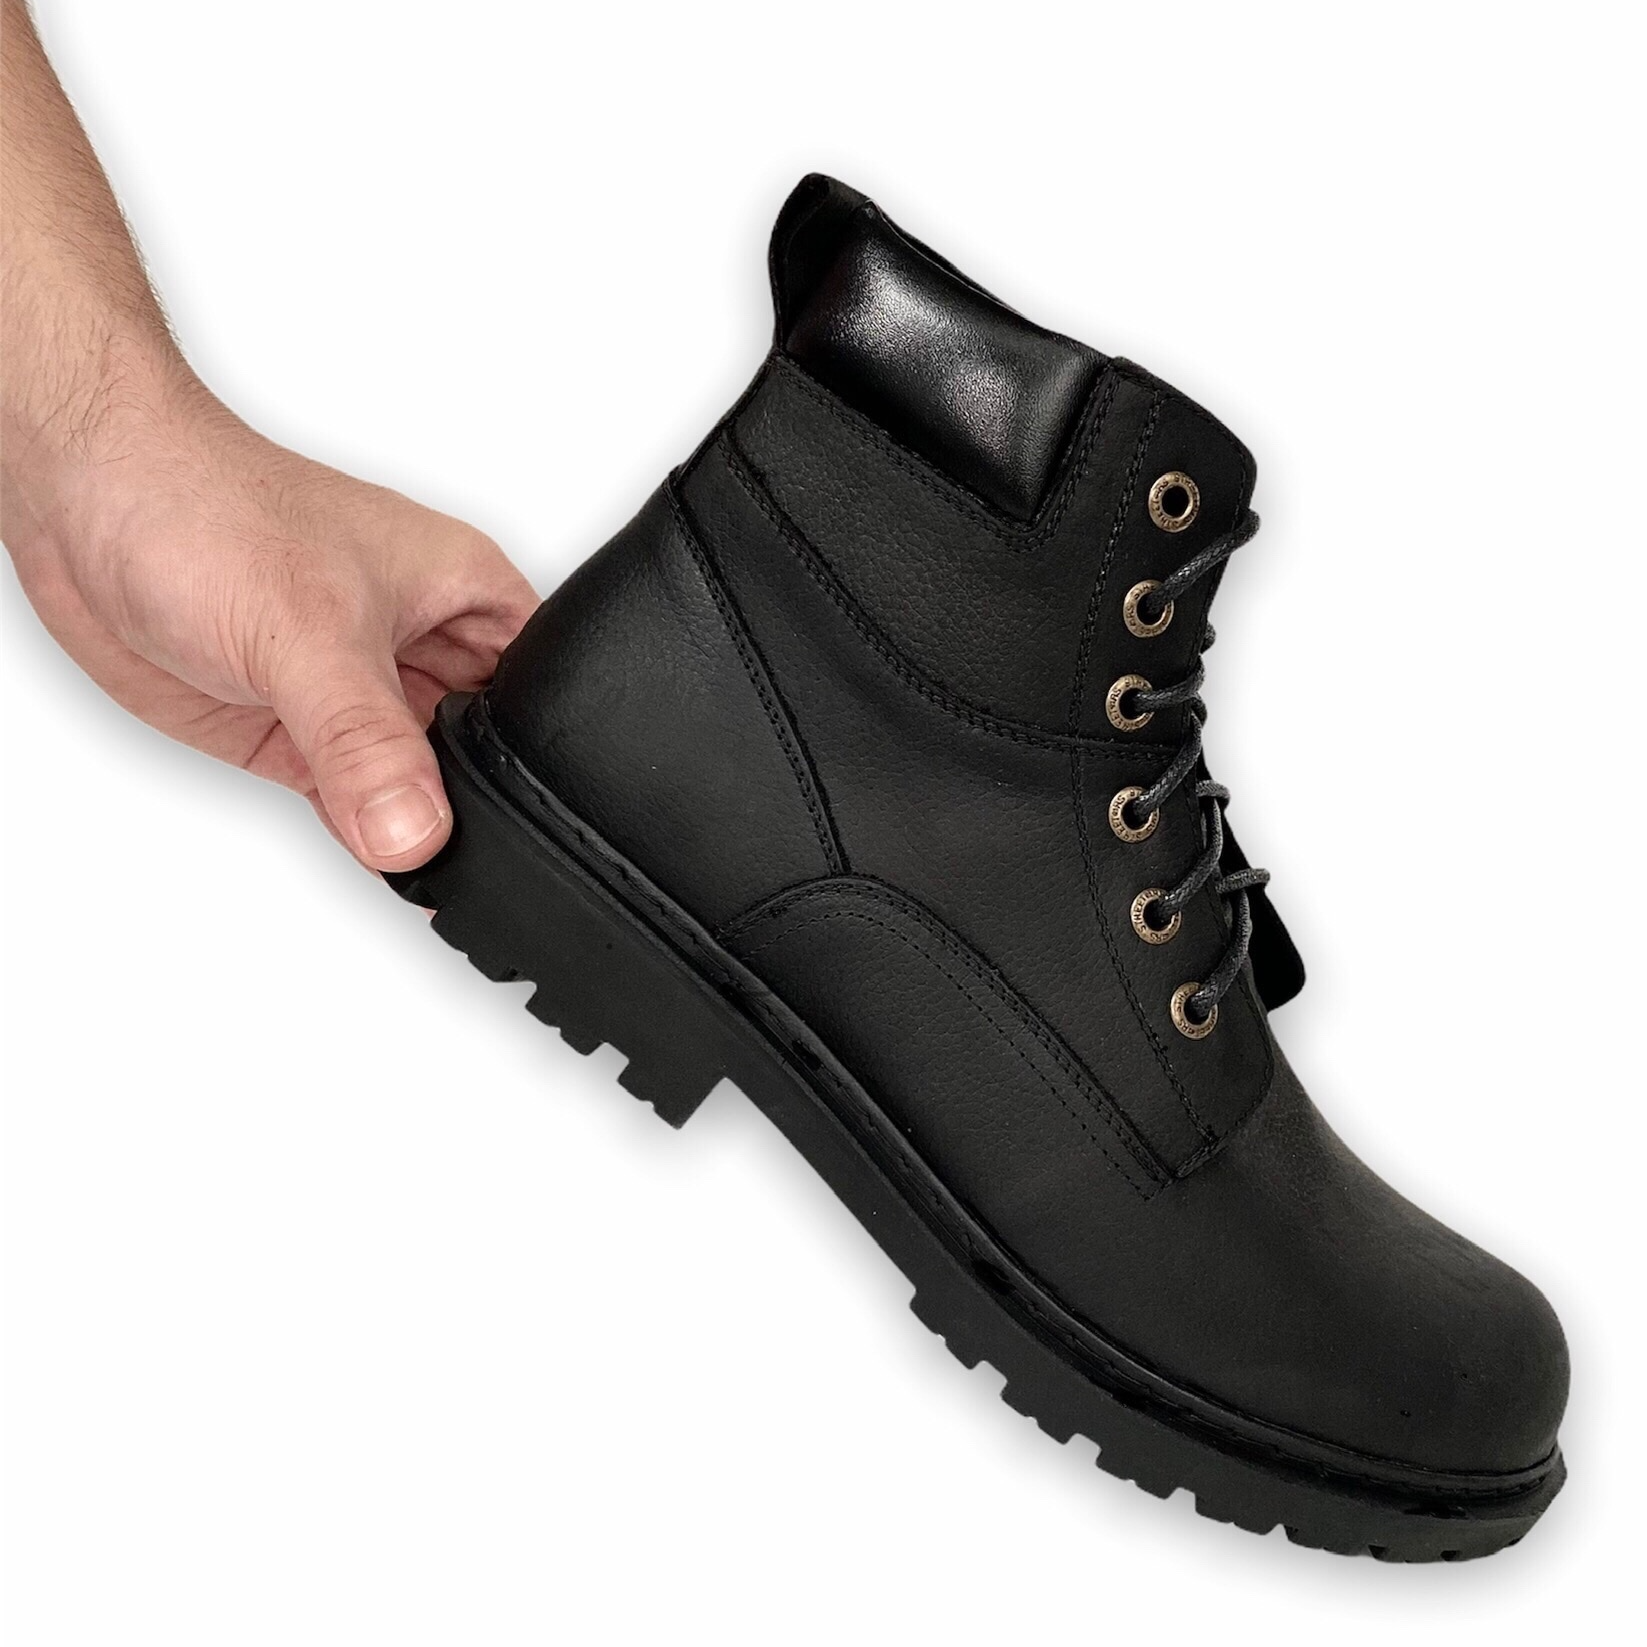 Giày Boots Nam Cổ Cao Da Bò Thật 100% Cao Cấp HN612 Đen Size 38 - 44